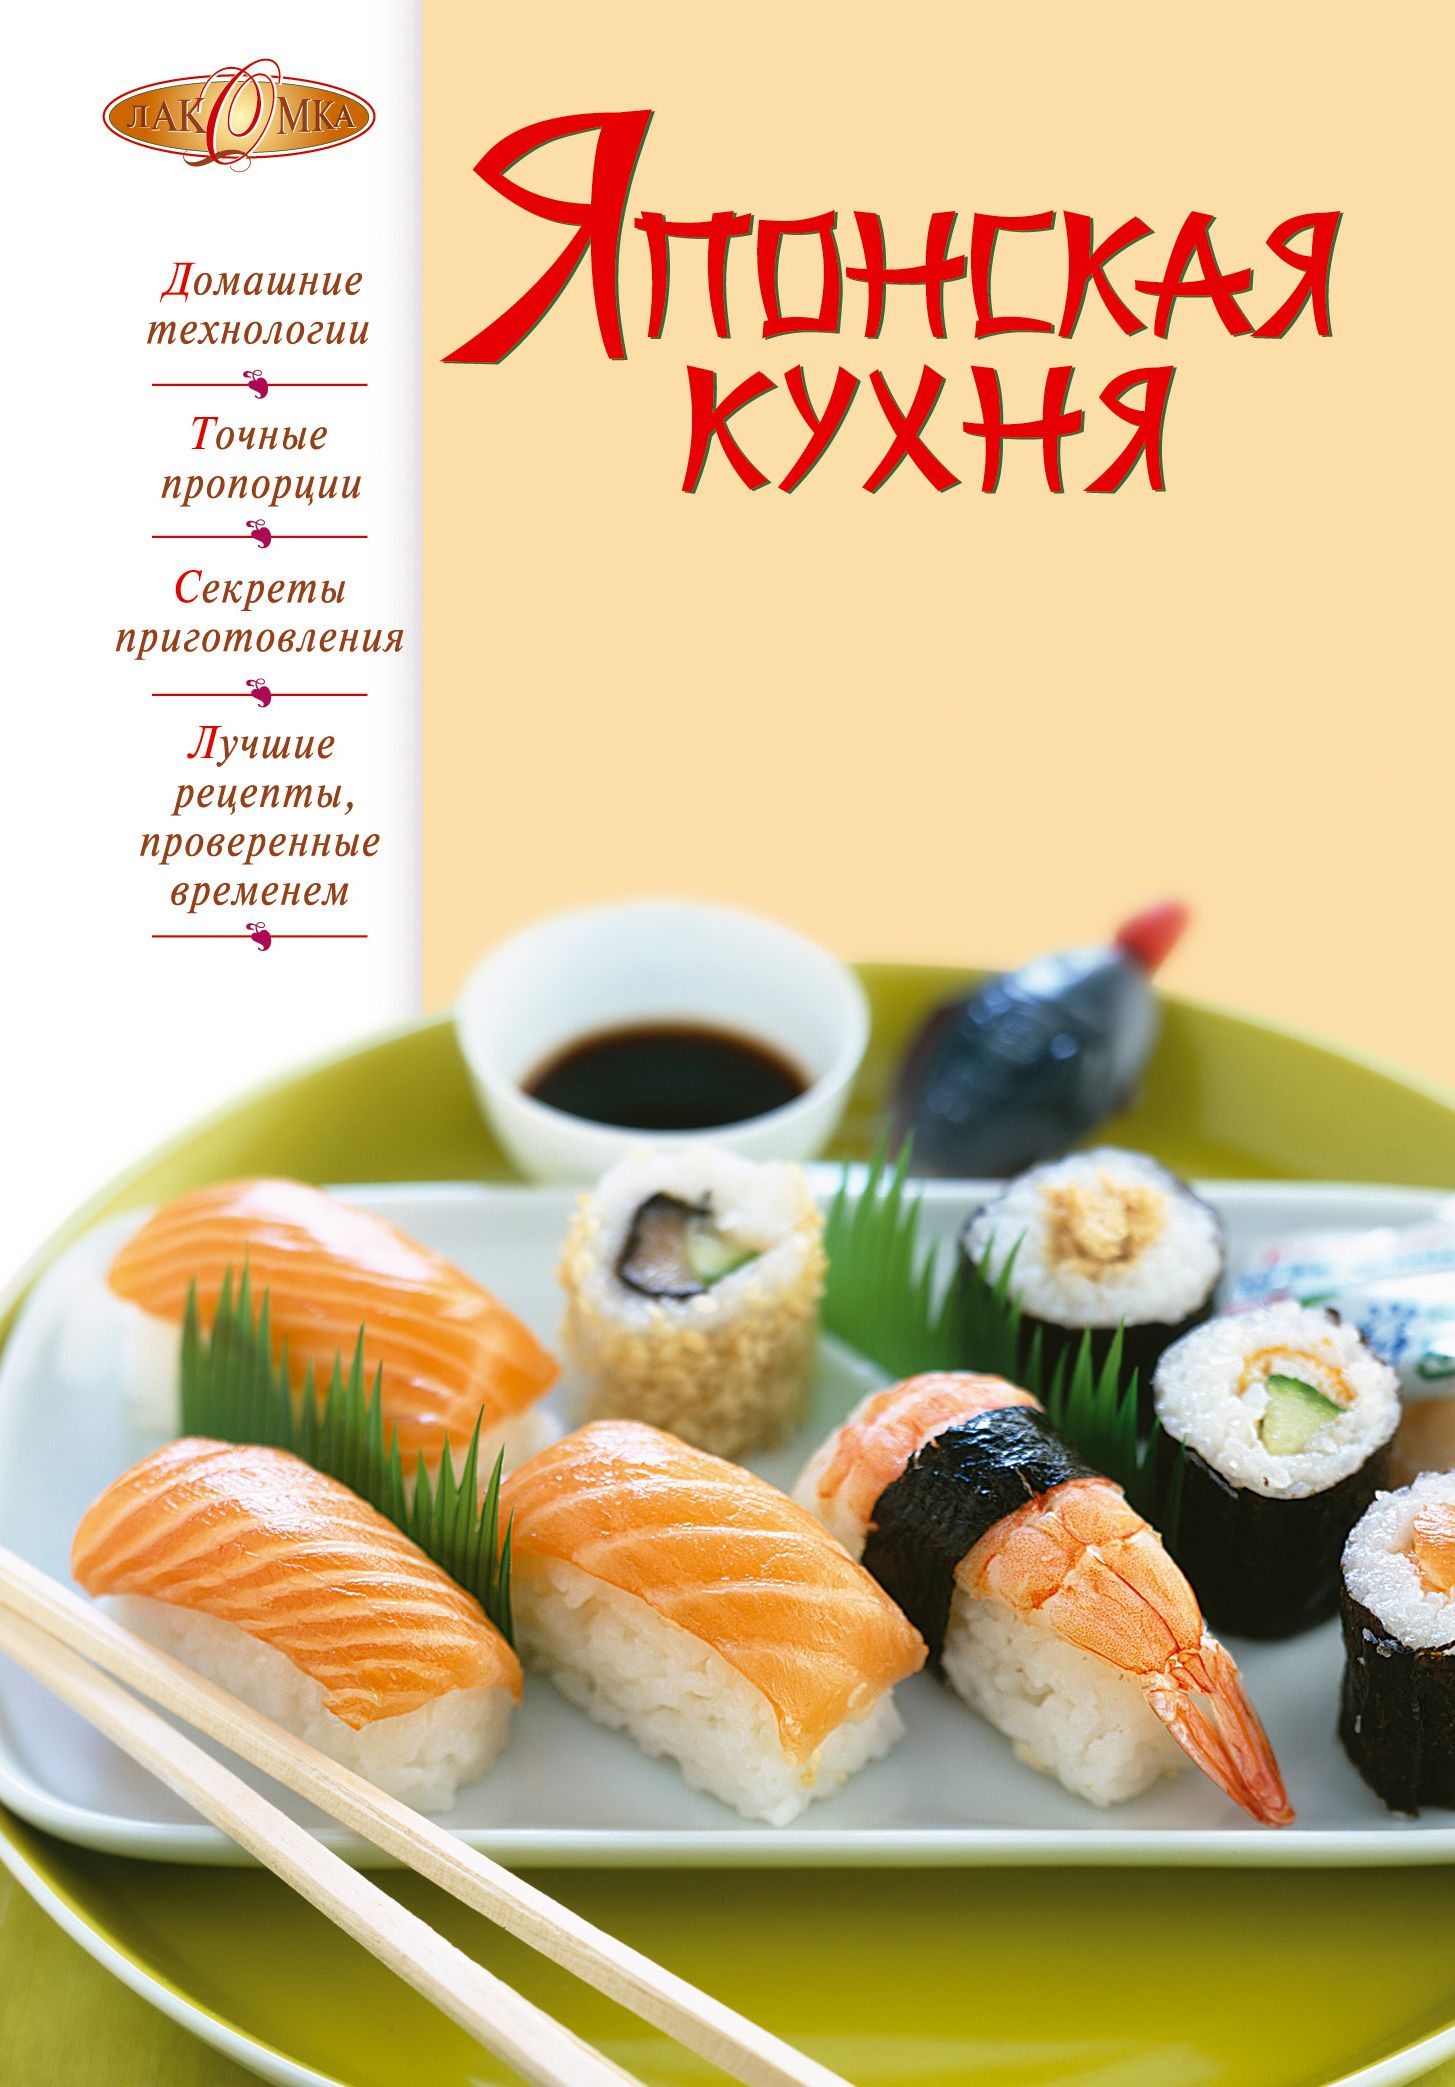 Книги лакомки. Японская кухня книга. Книга рецептов японской кухни. Книжка рецептов японской кухни. Кулинарная книга японской кухни.